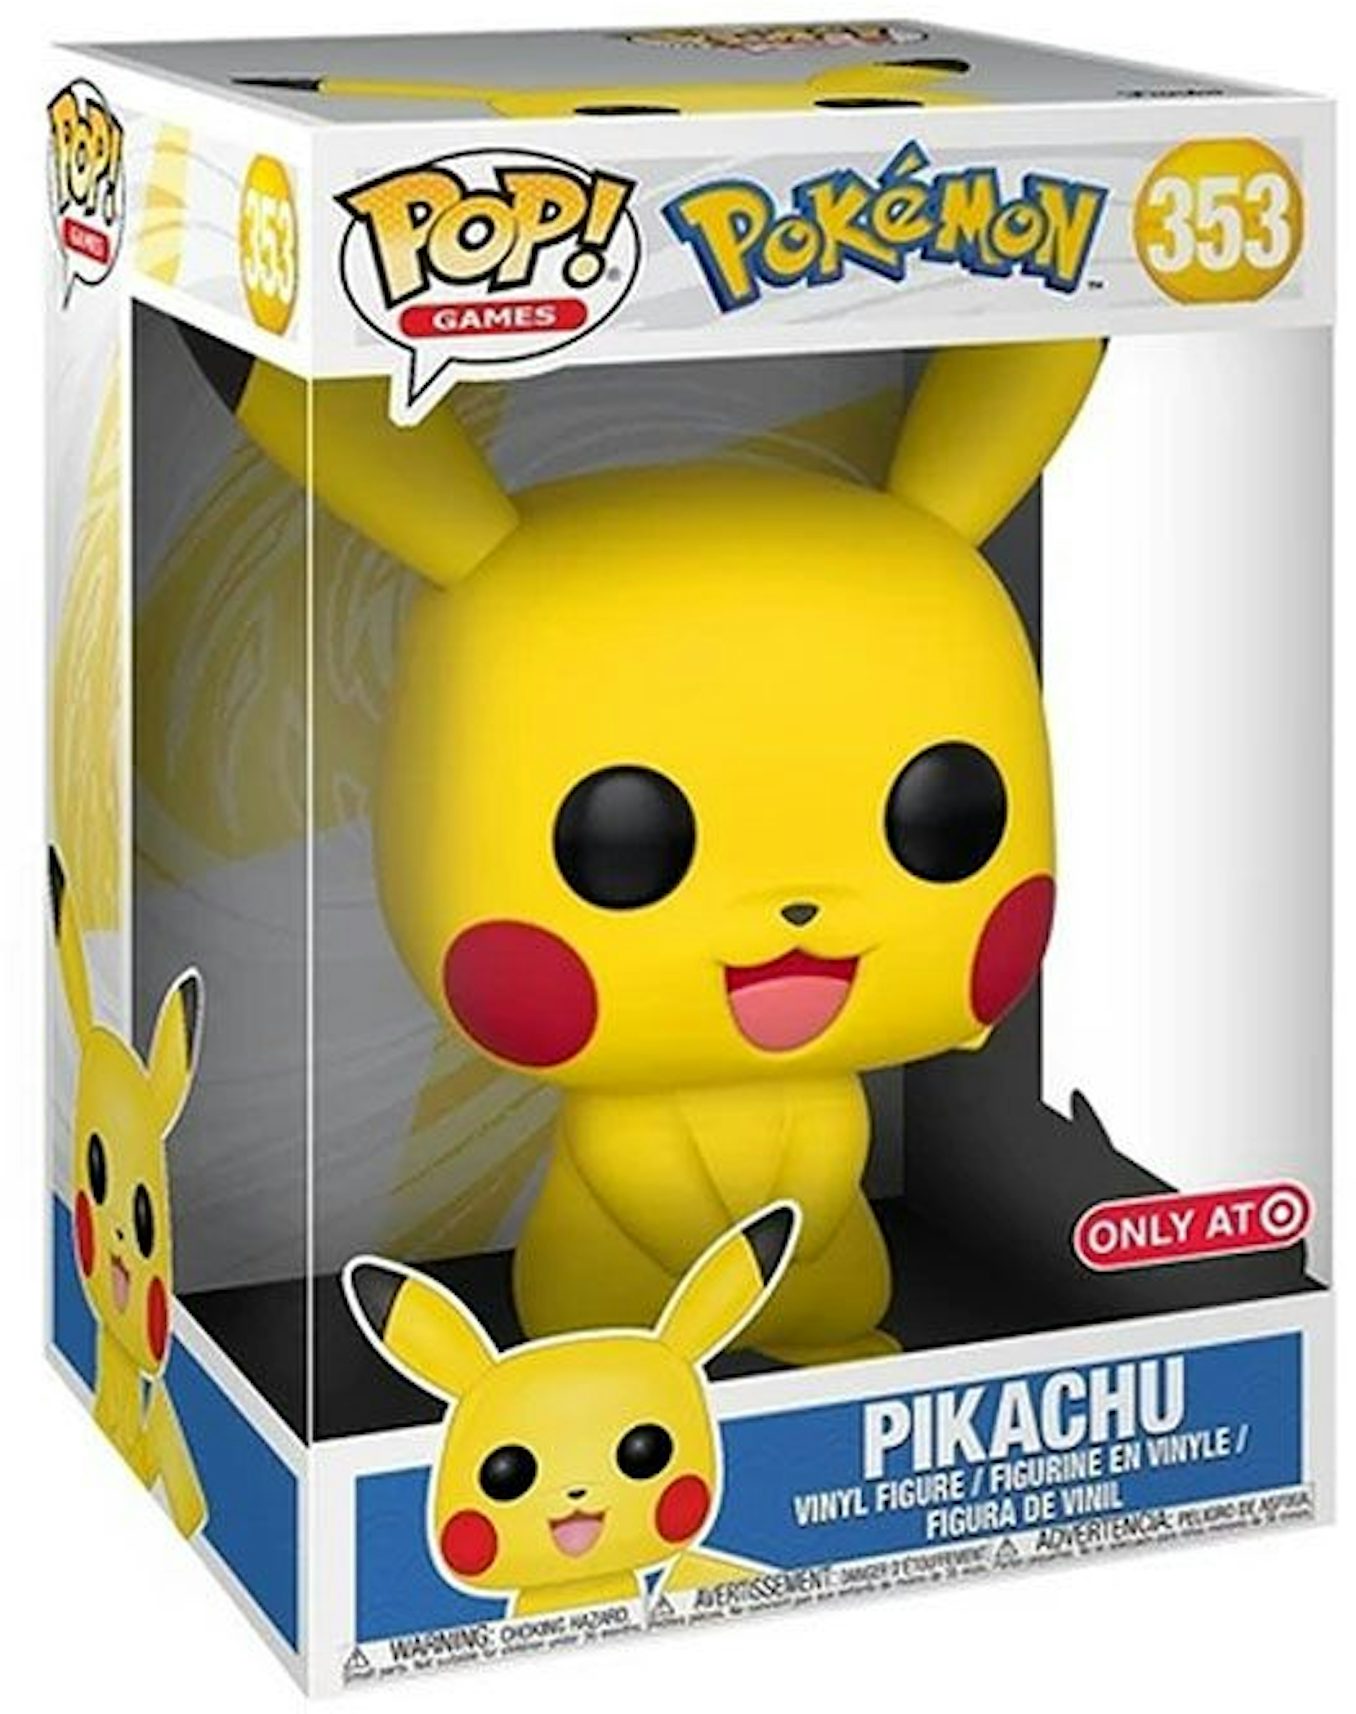 Buy Pop! Pikachu at Funko.